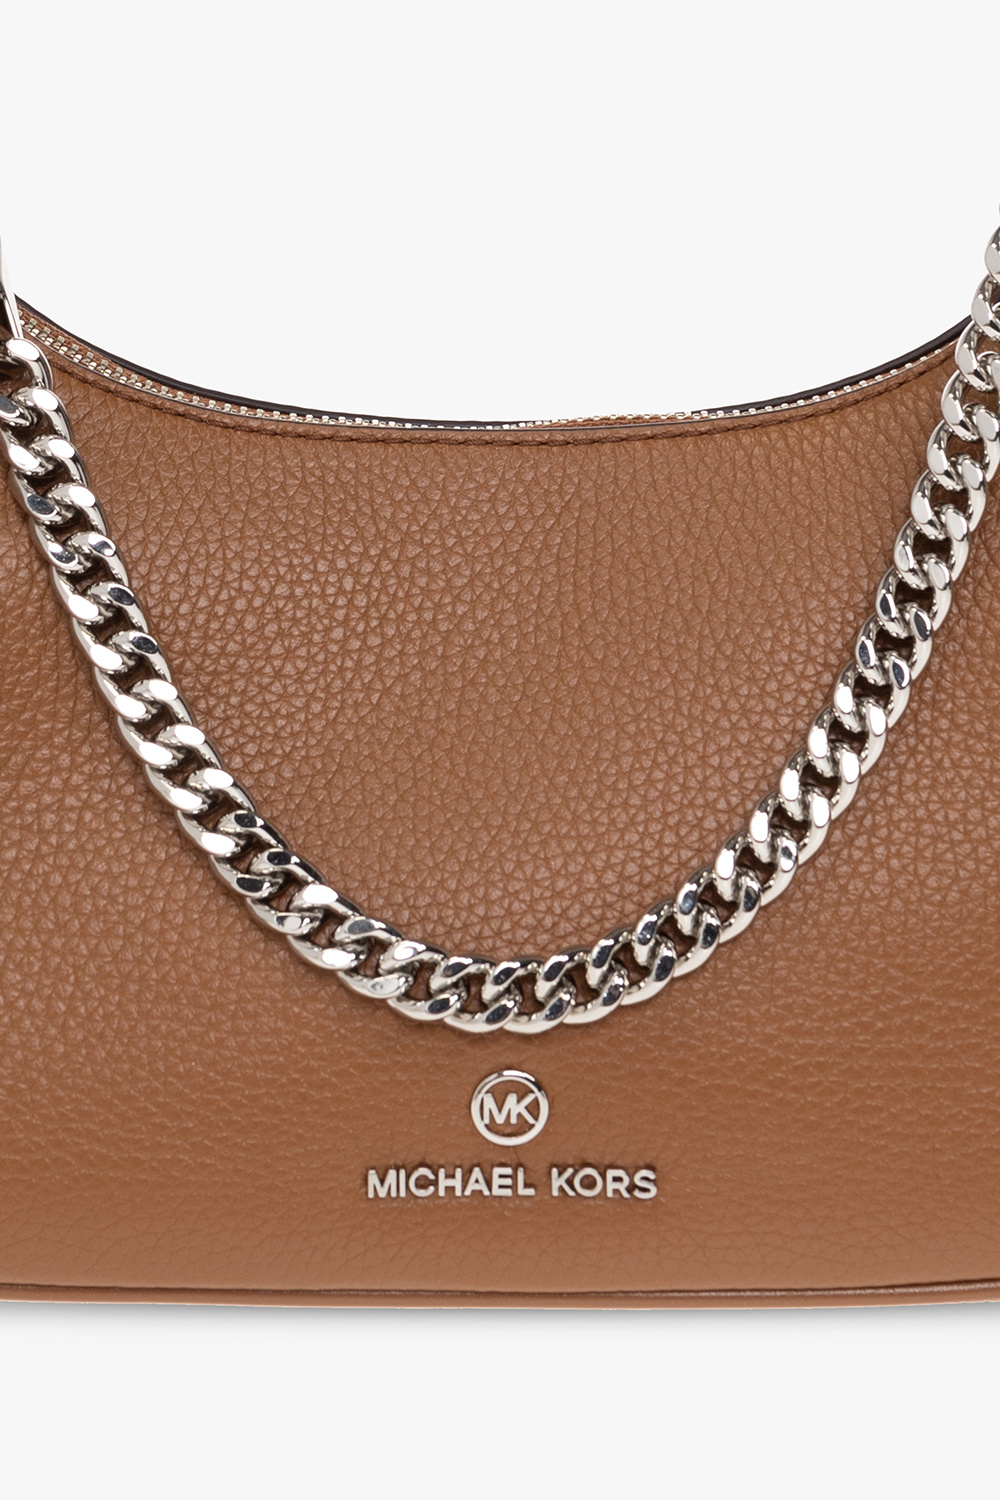 Michael Michael Kors Piper Small Pouchette Bag